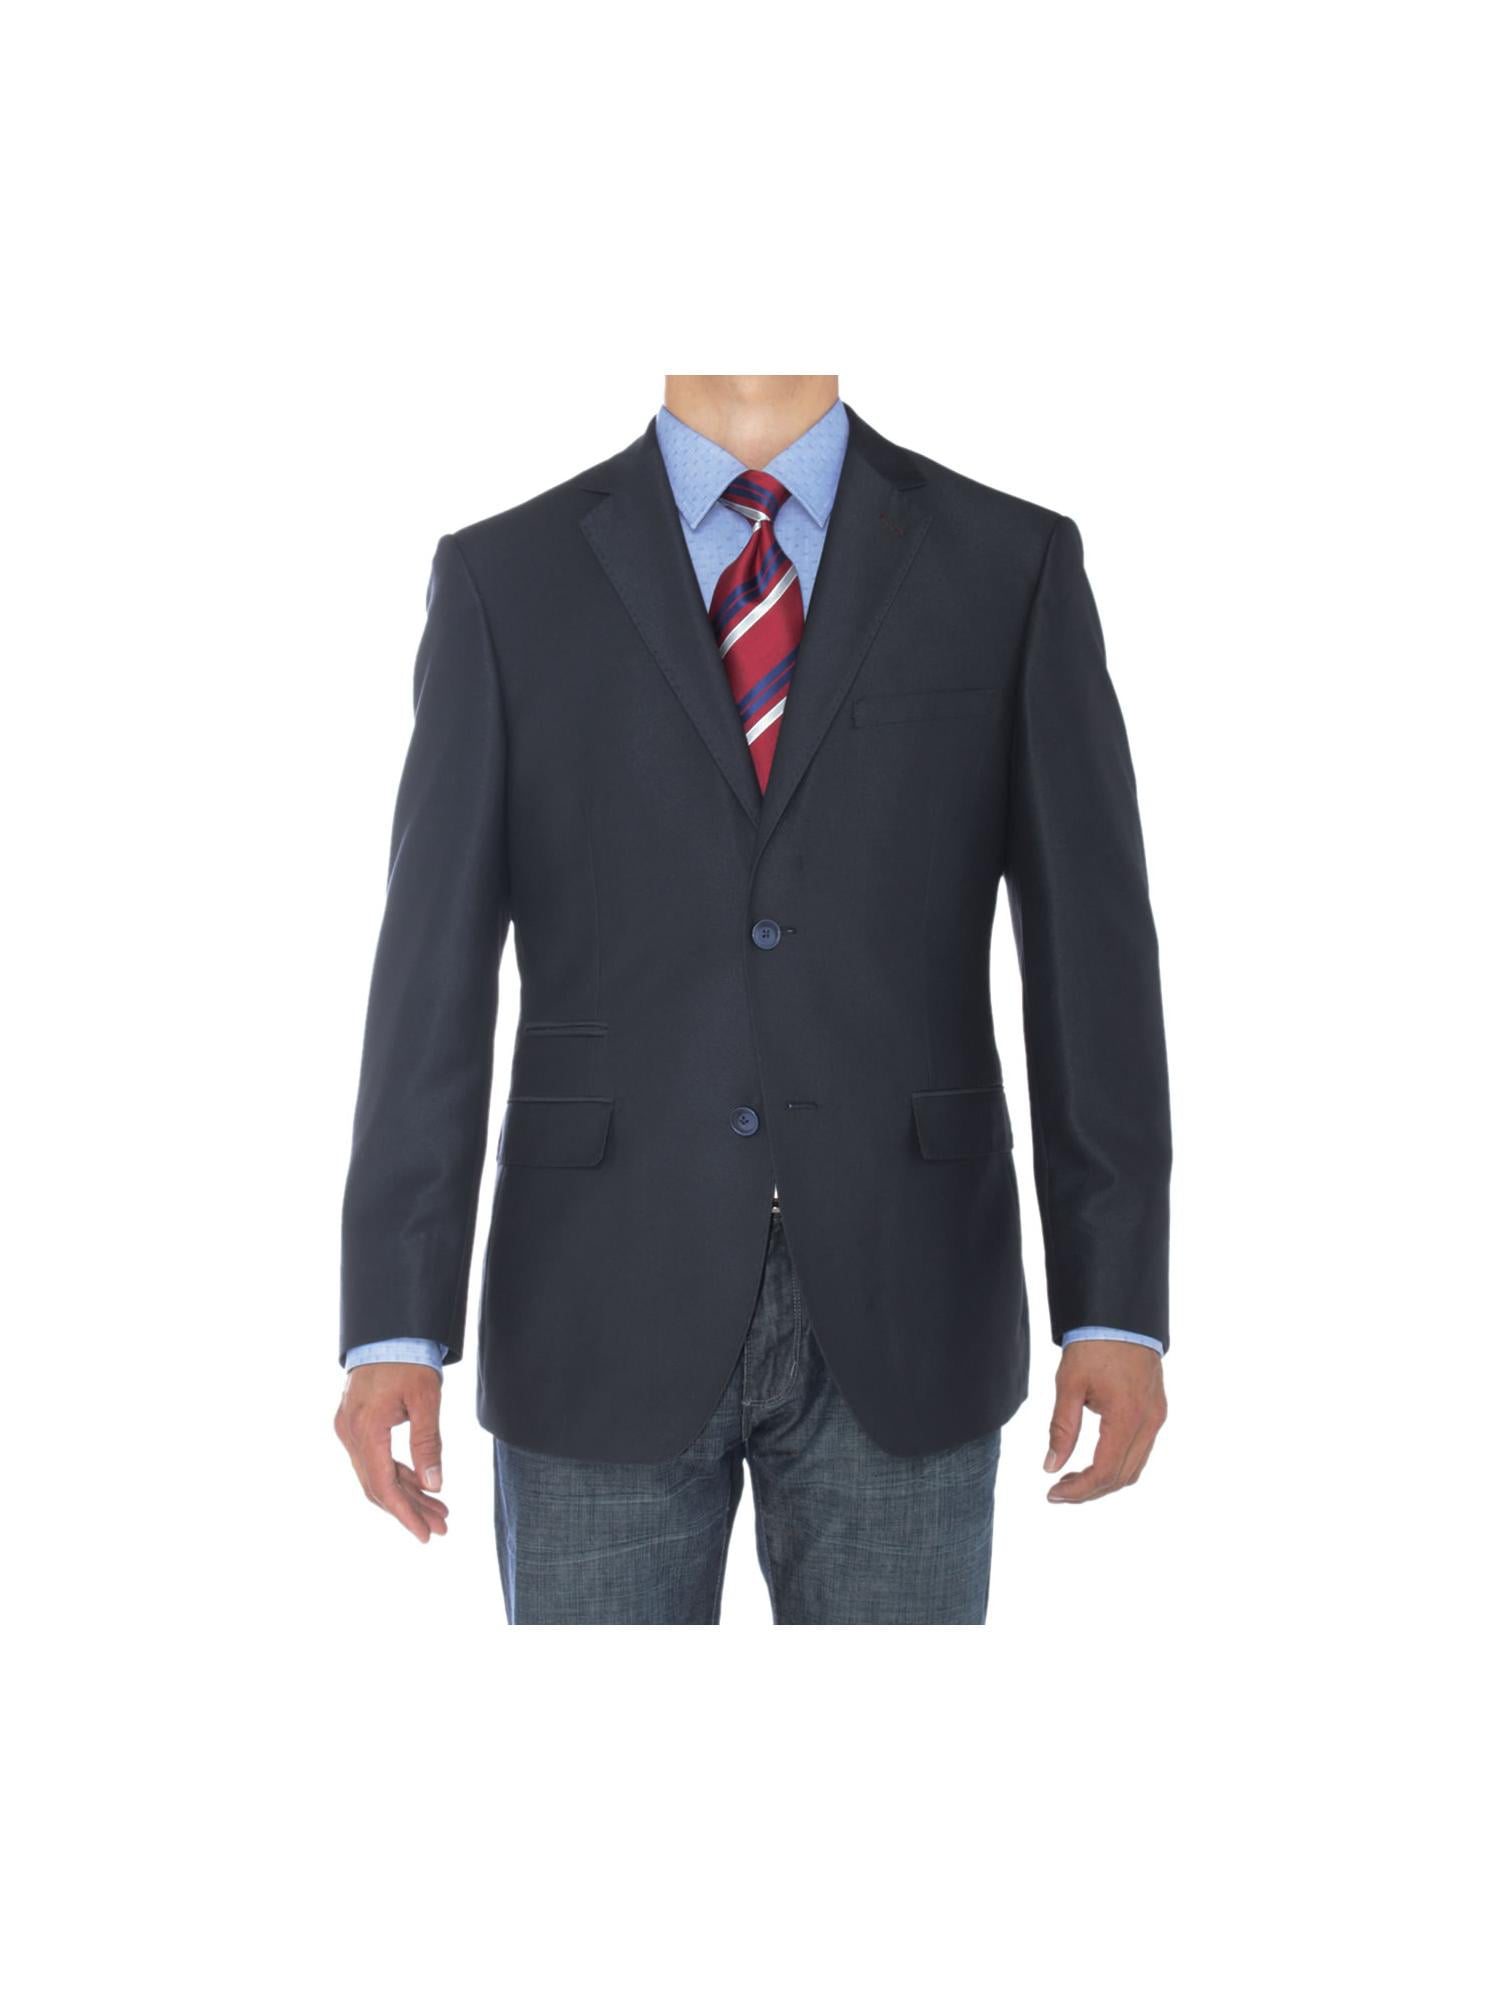 LN LUCIANO NATAZZI Mens Two Button Notch Lapel Blazer Modern Fit Suit Jacket 